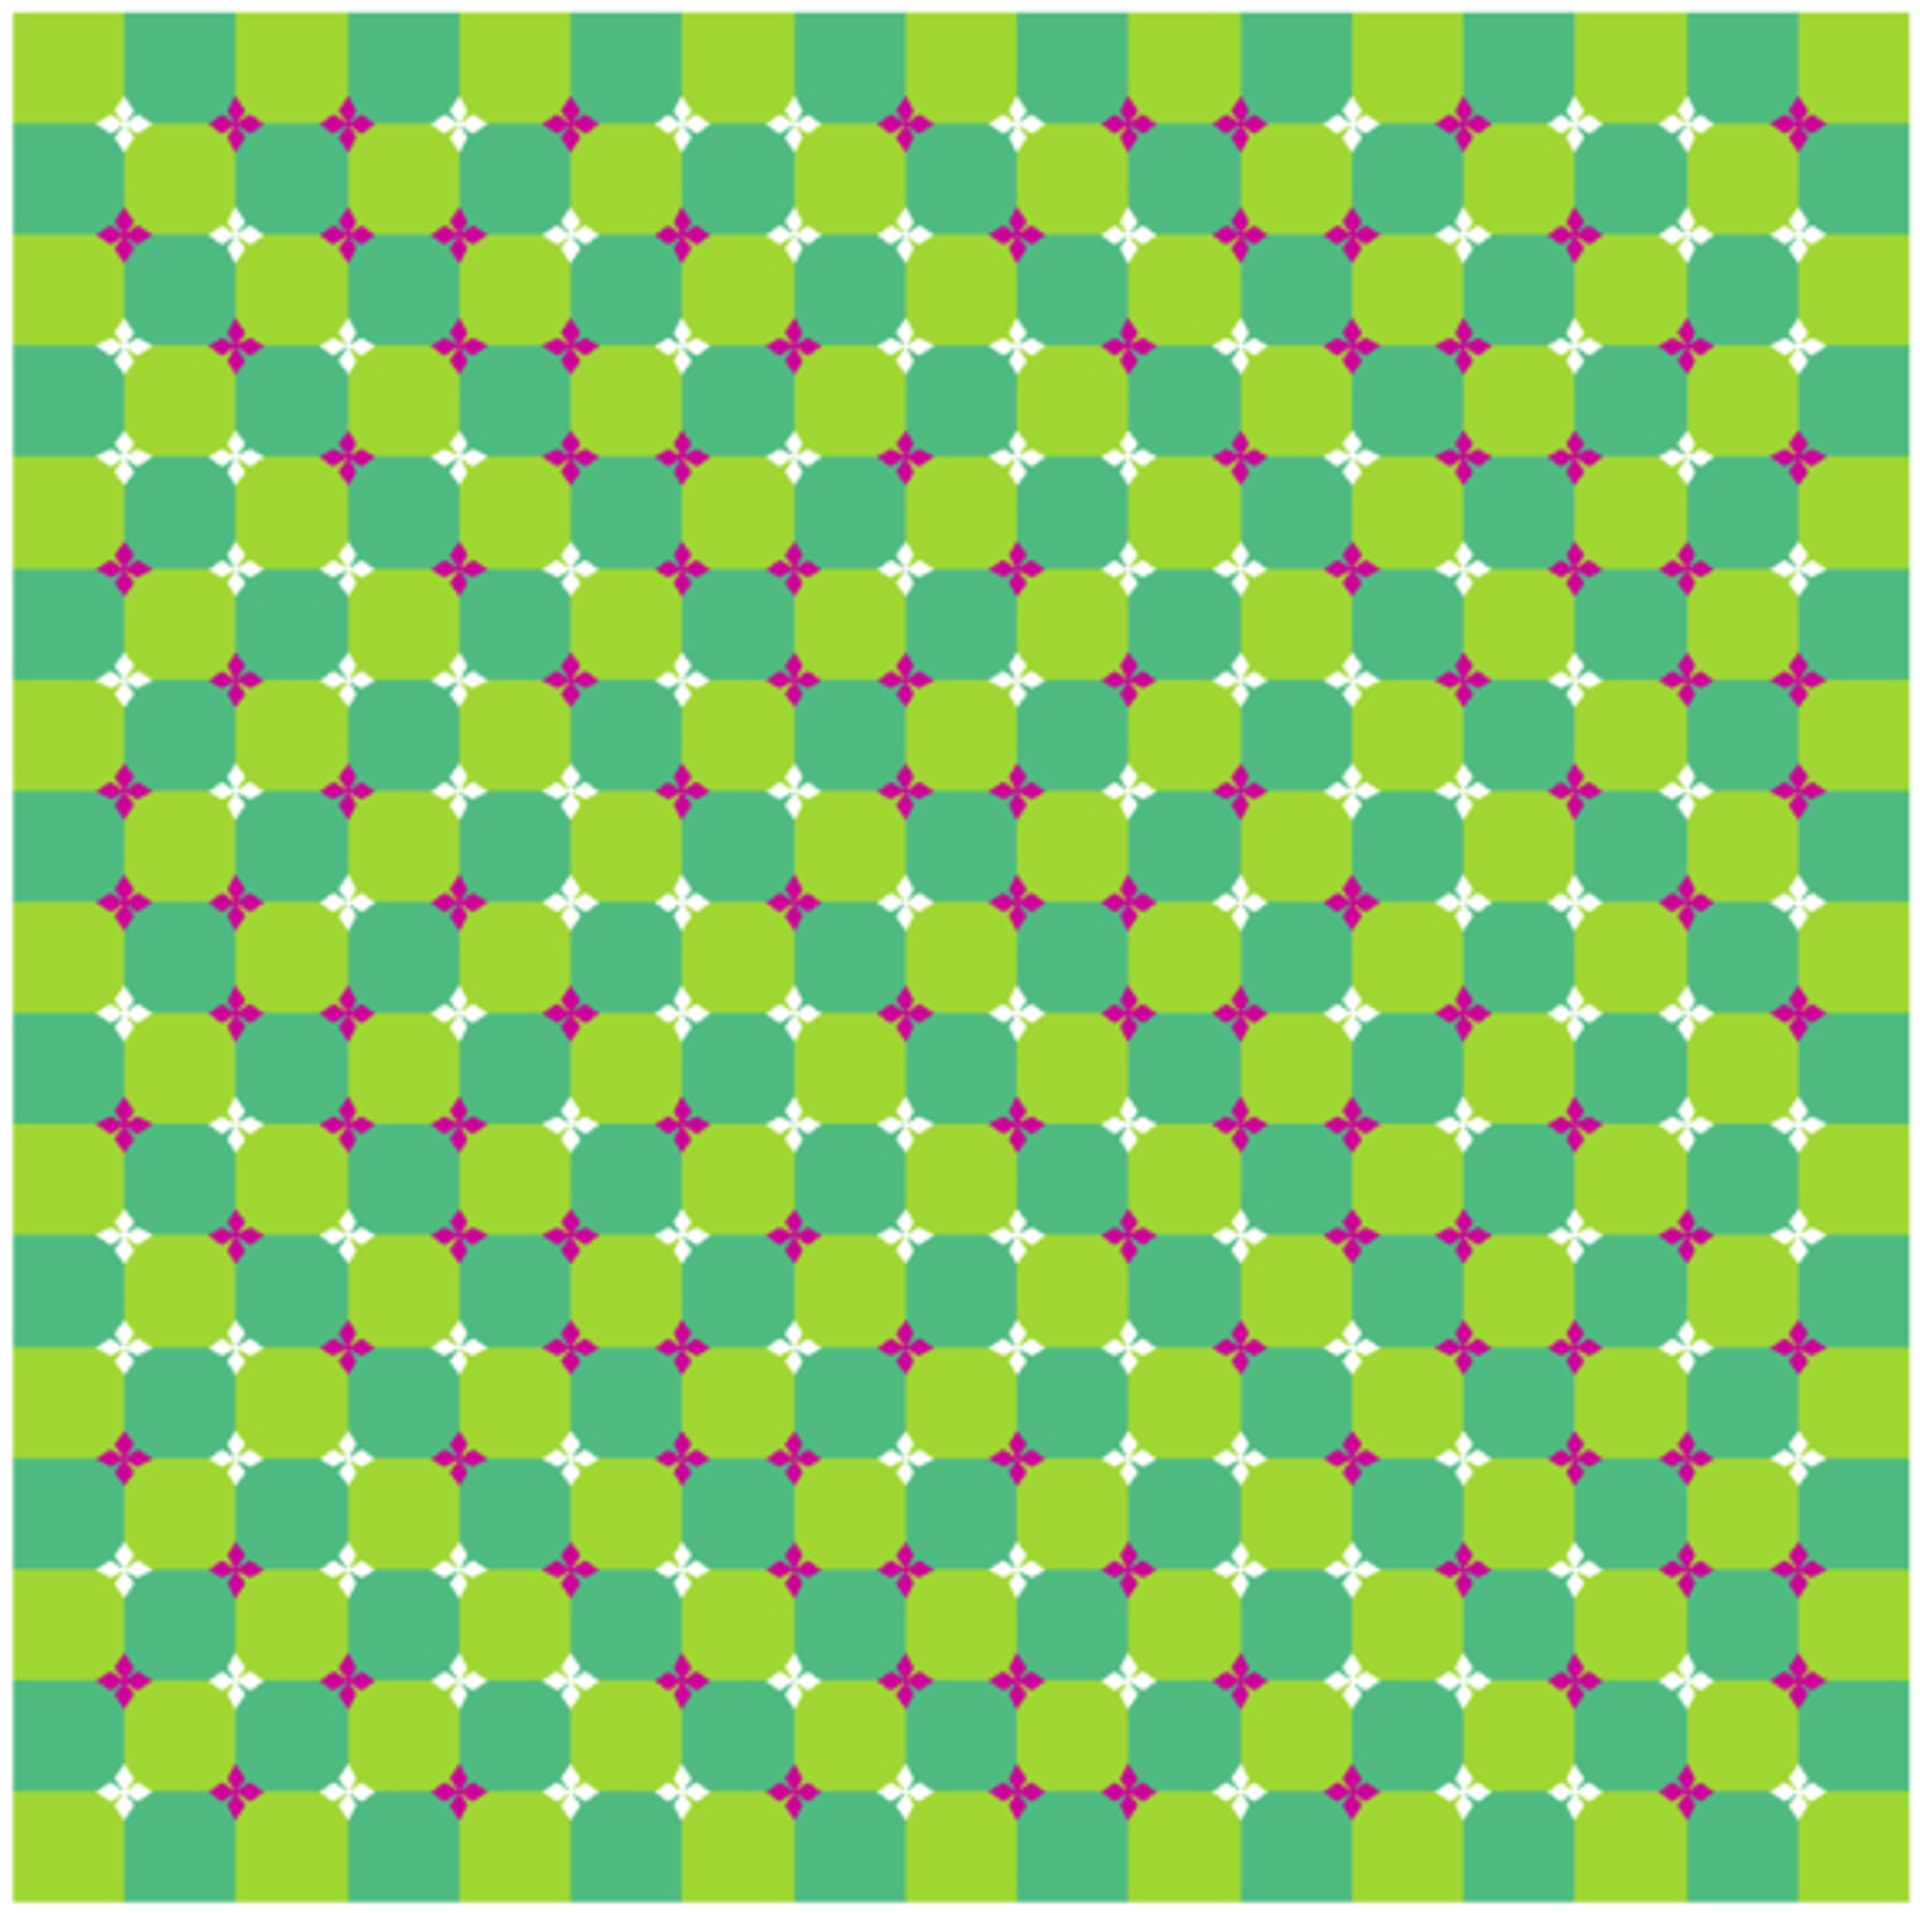 Optická iluze